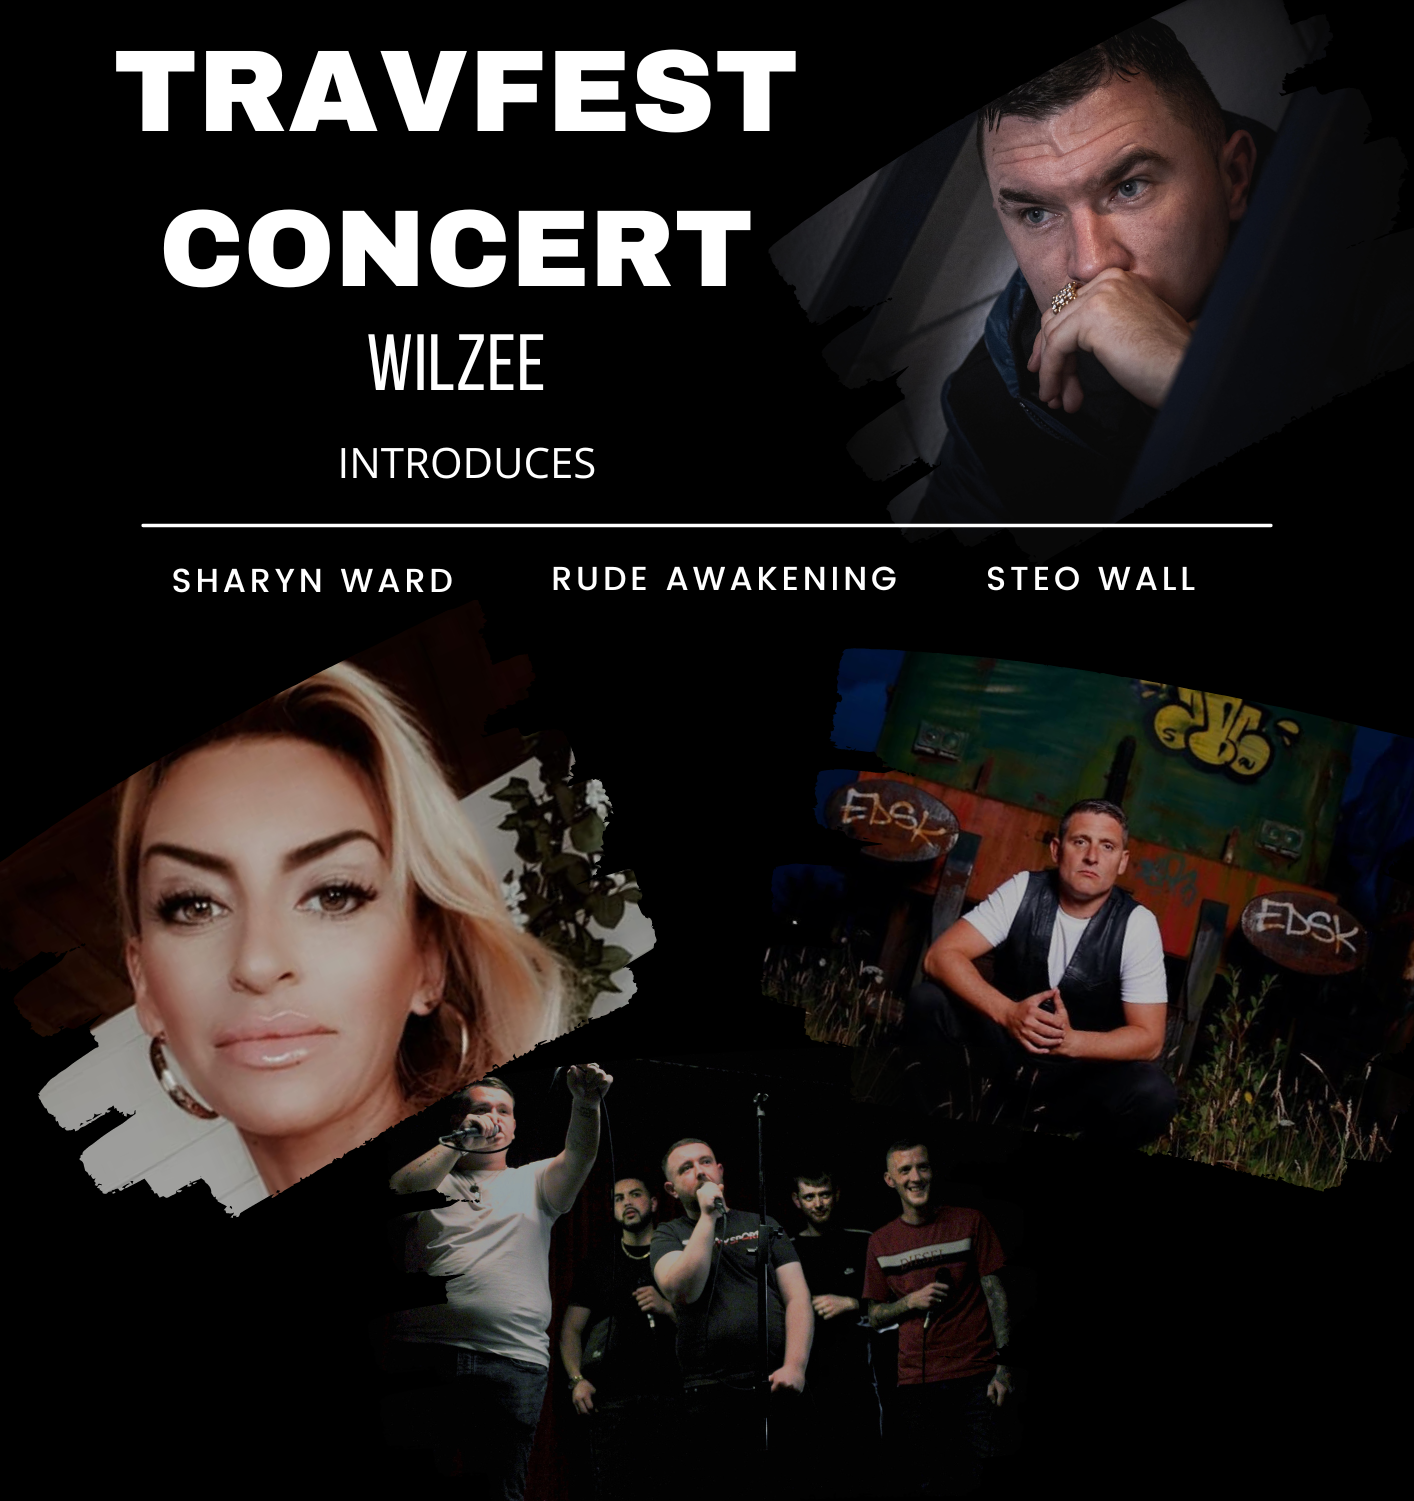 Travfest